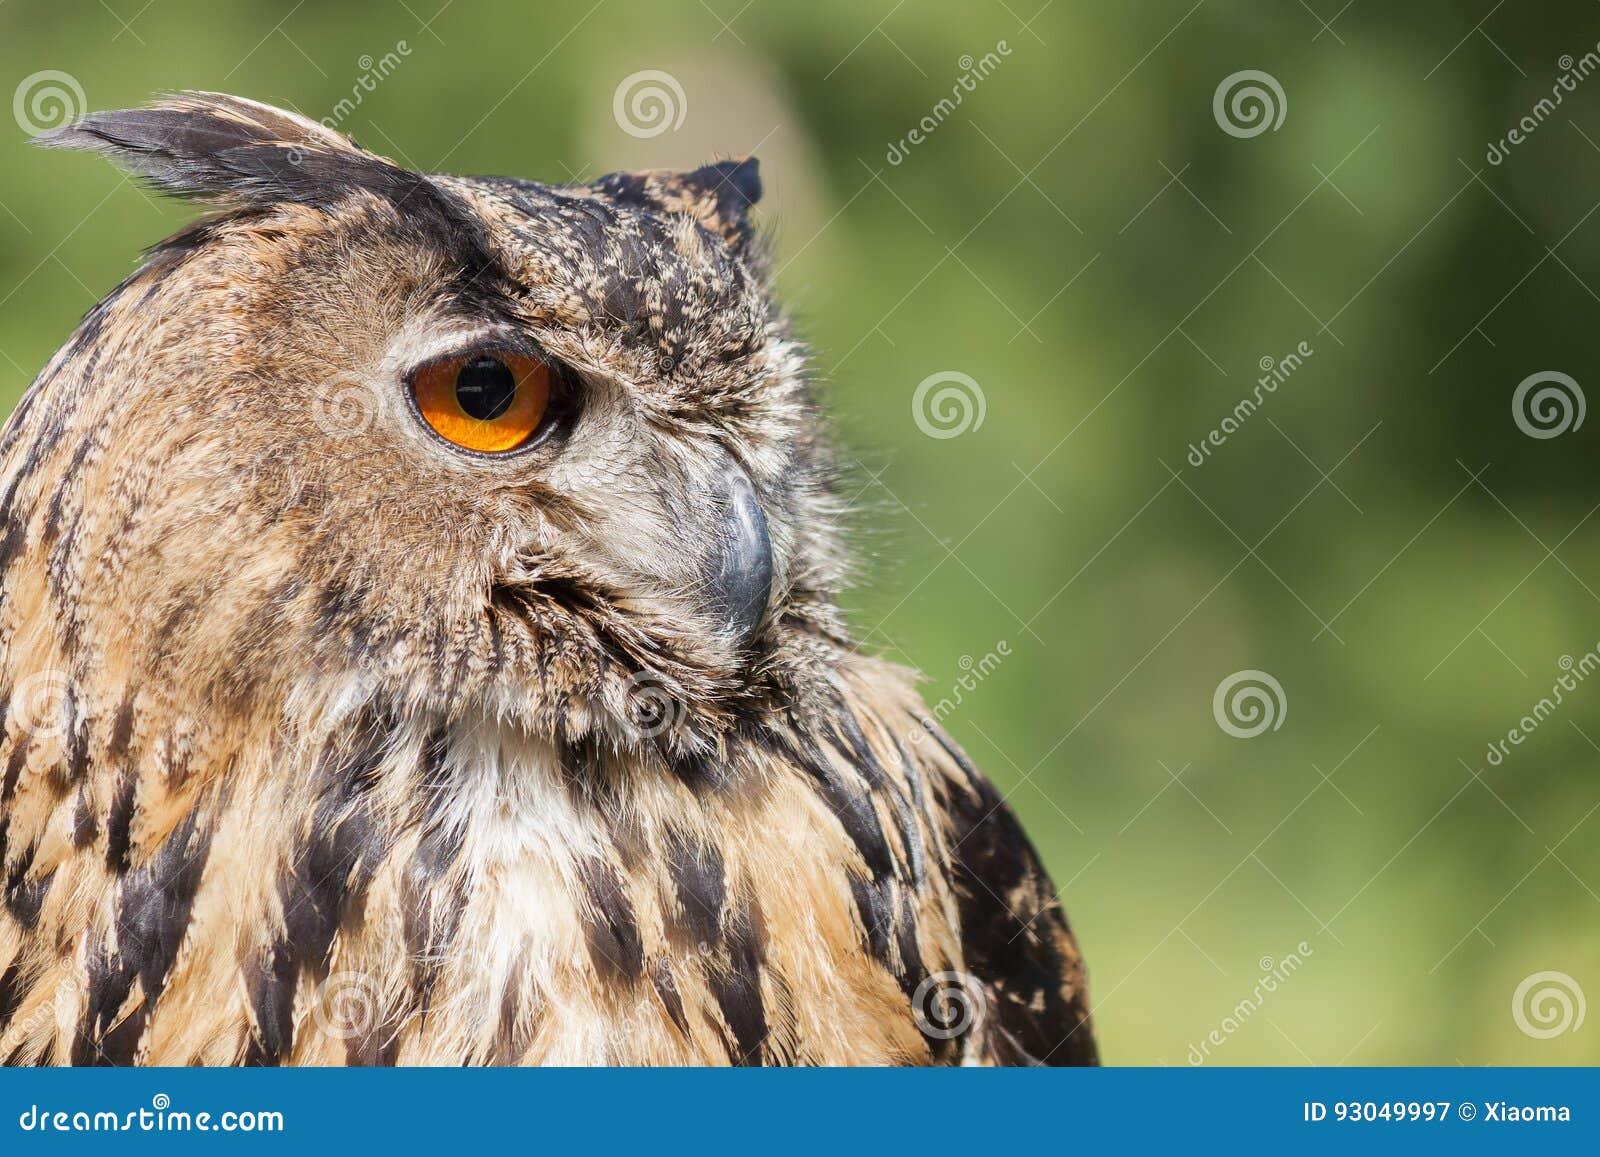 Real owl, bubo bubo stock image. Image of closeup, eyes - 93049997